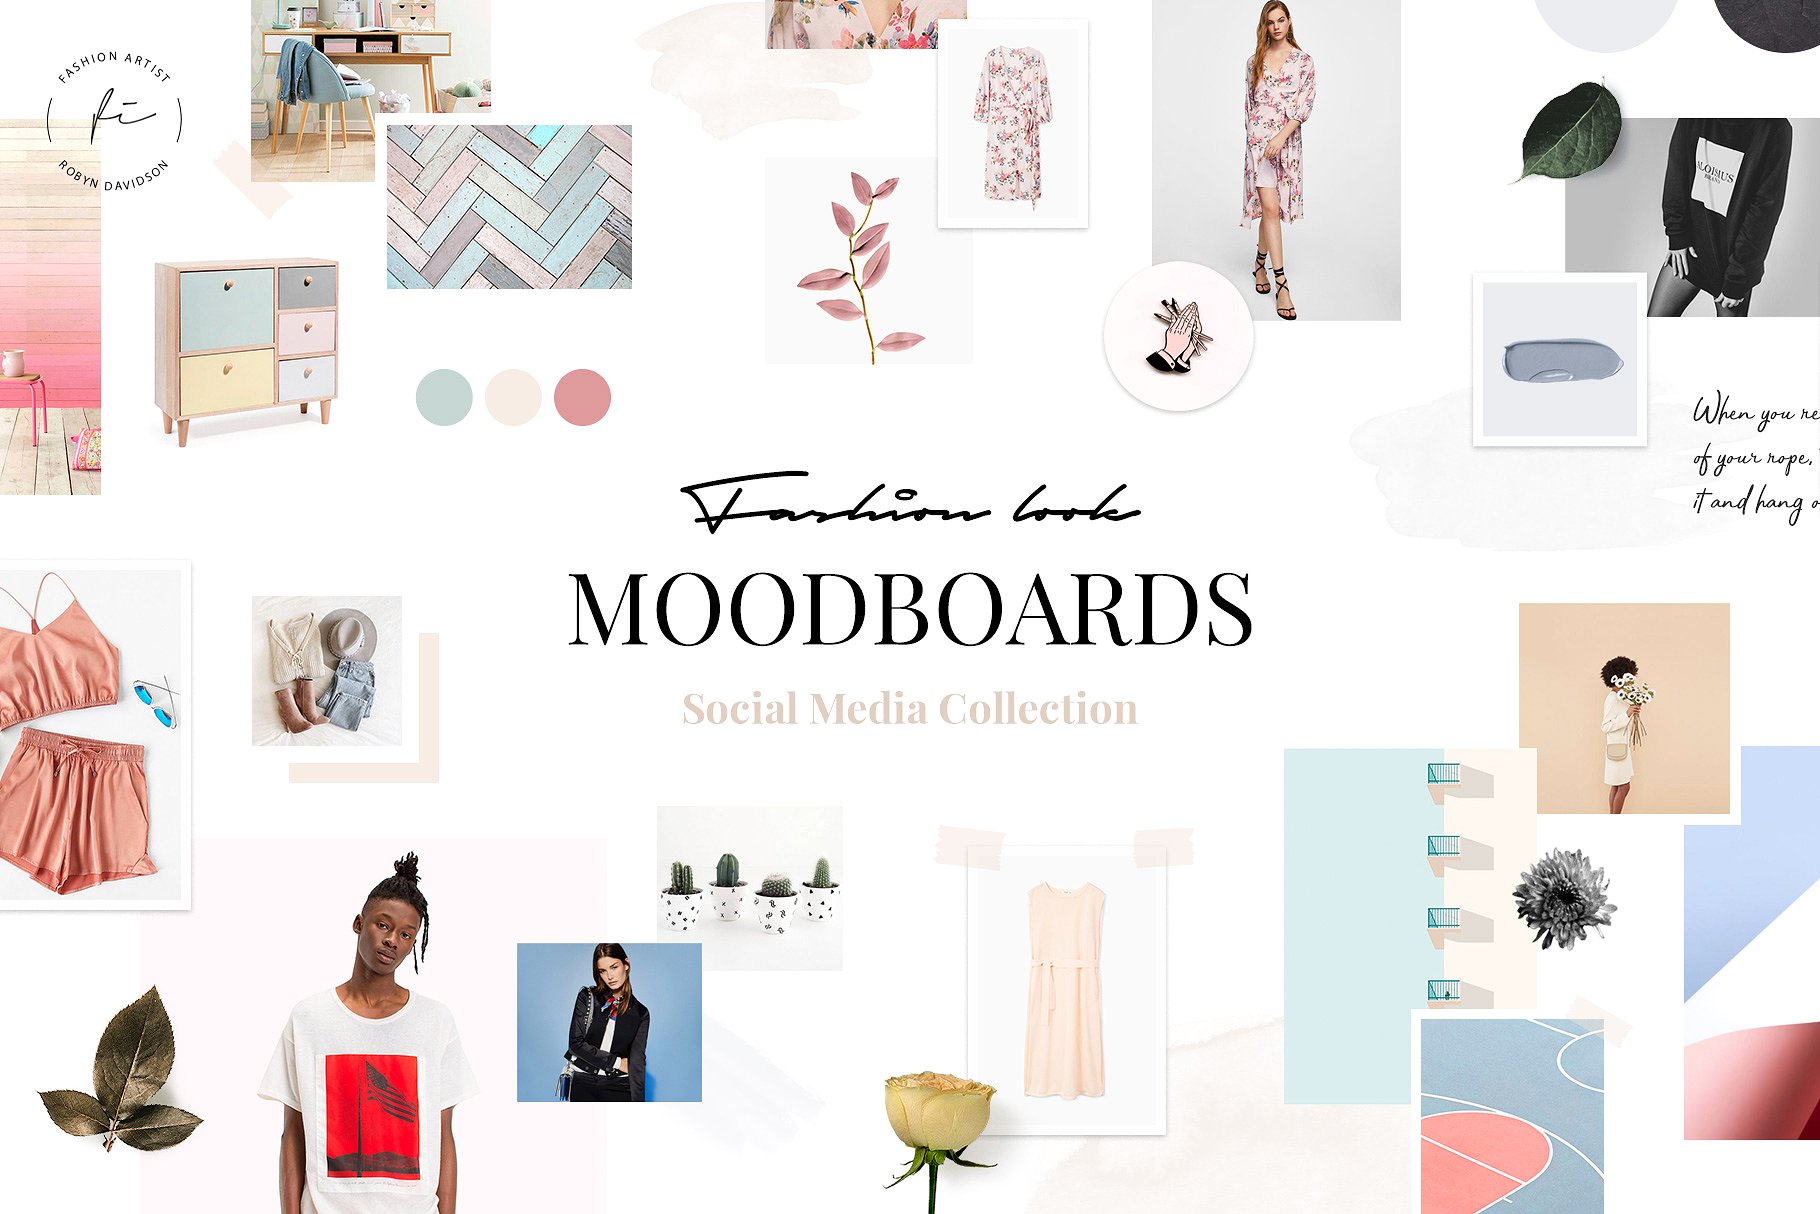 新社交媒体时尚故事贴图模板第一素材精选 Fashionized Mood Boards Collection插图